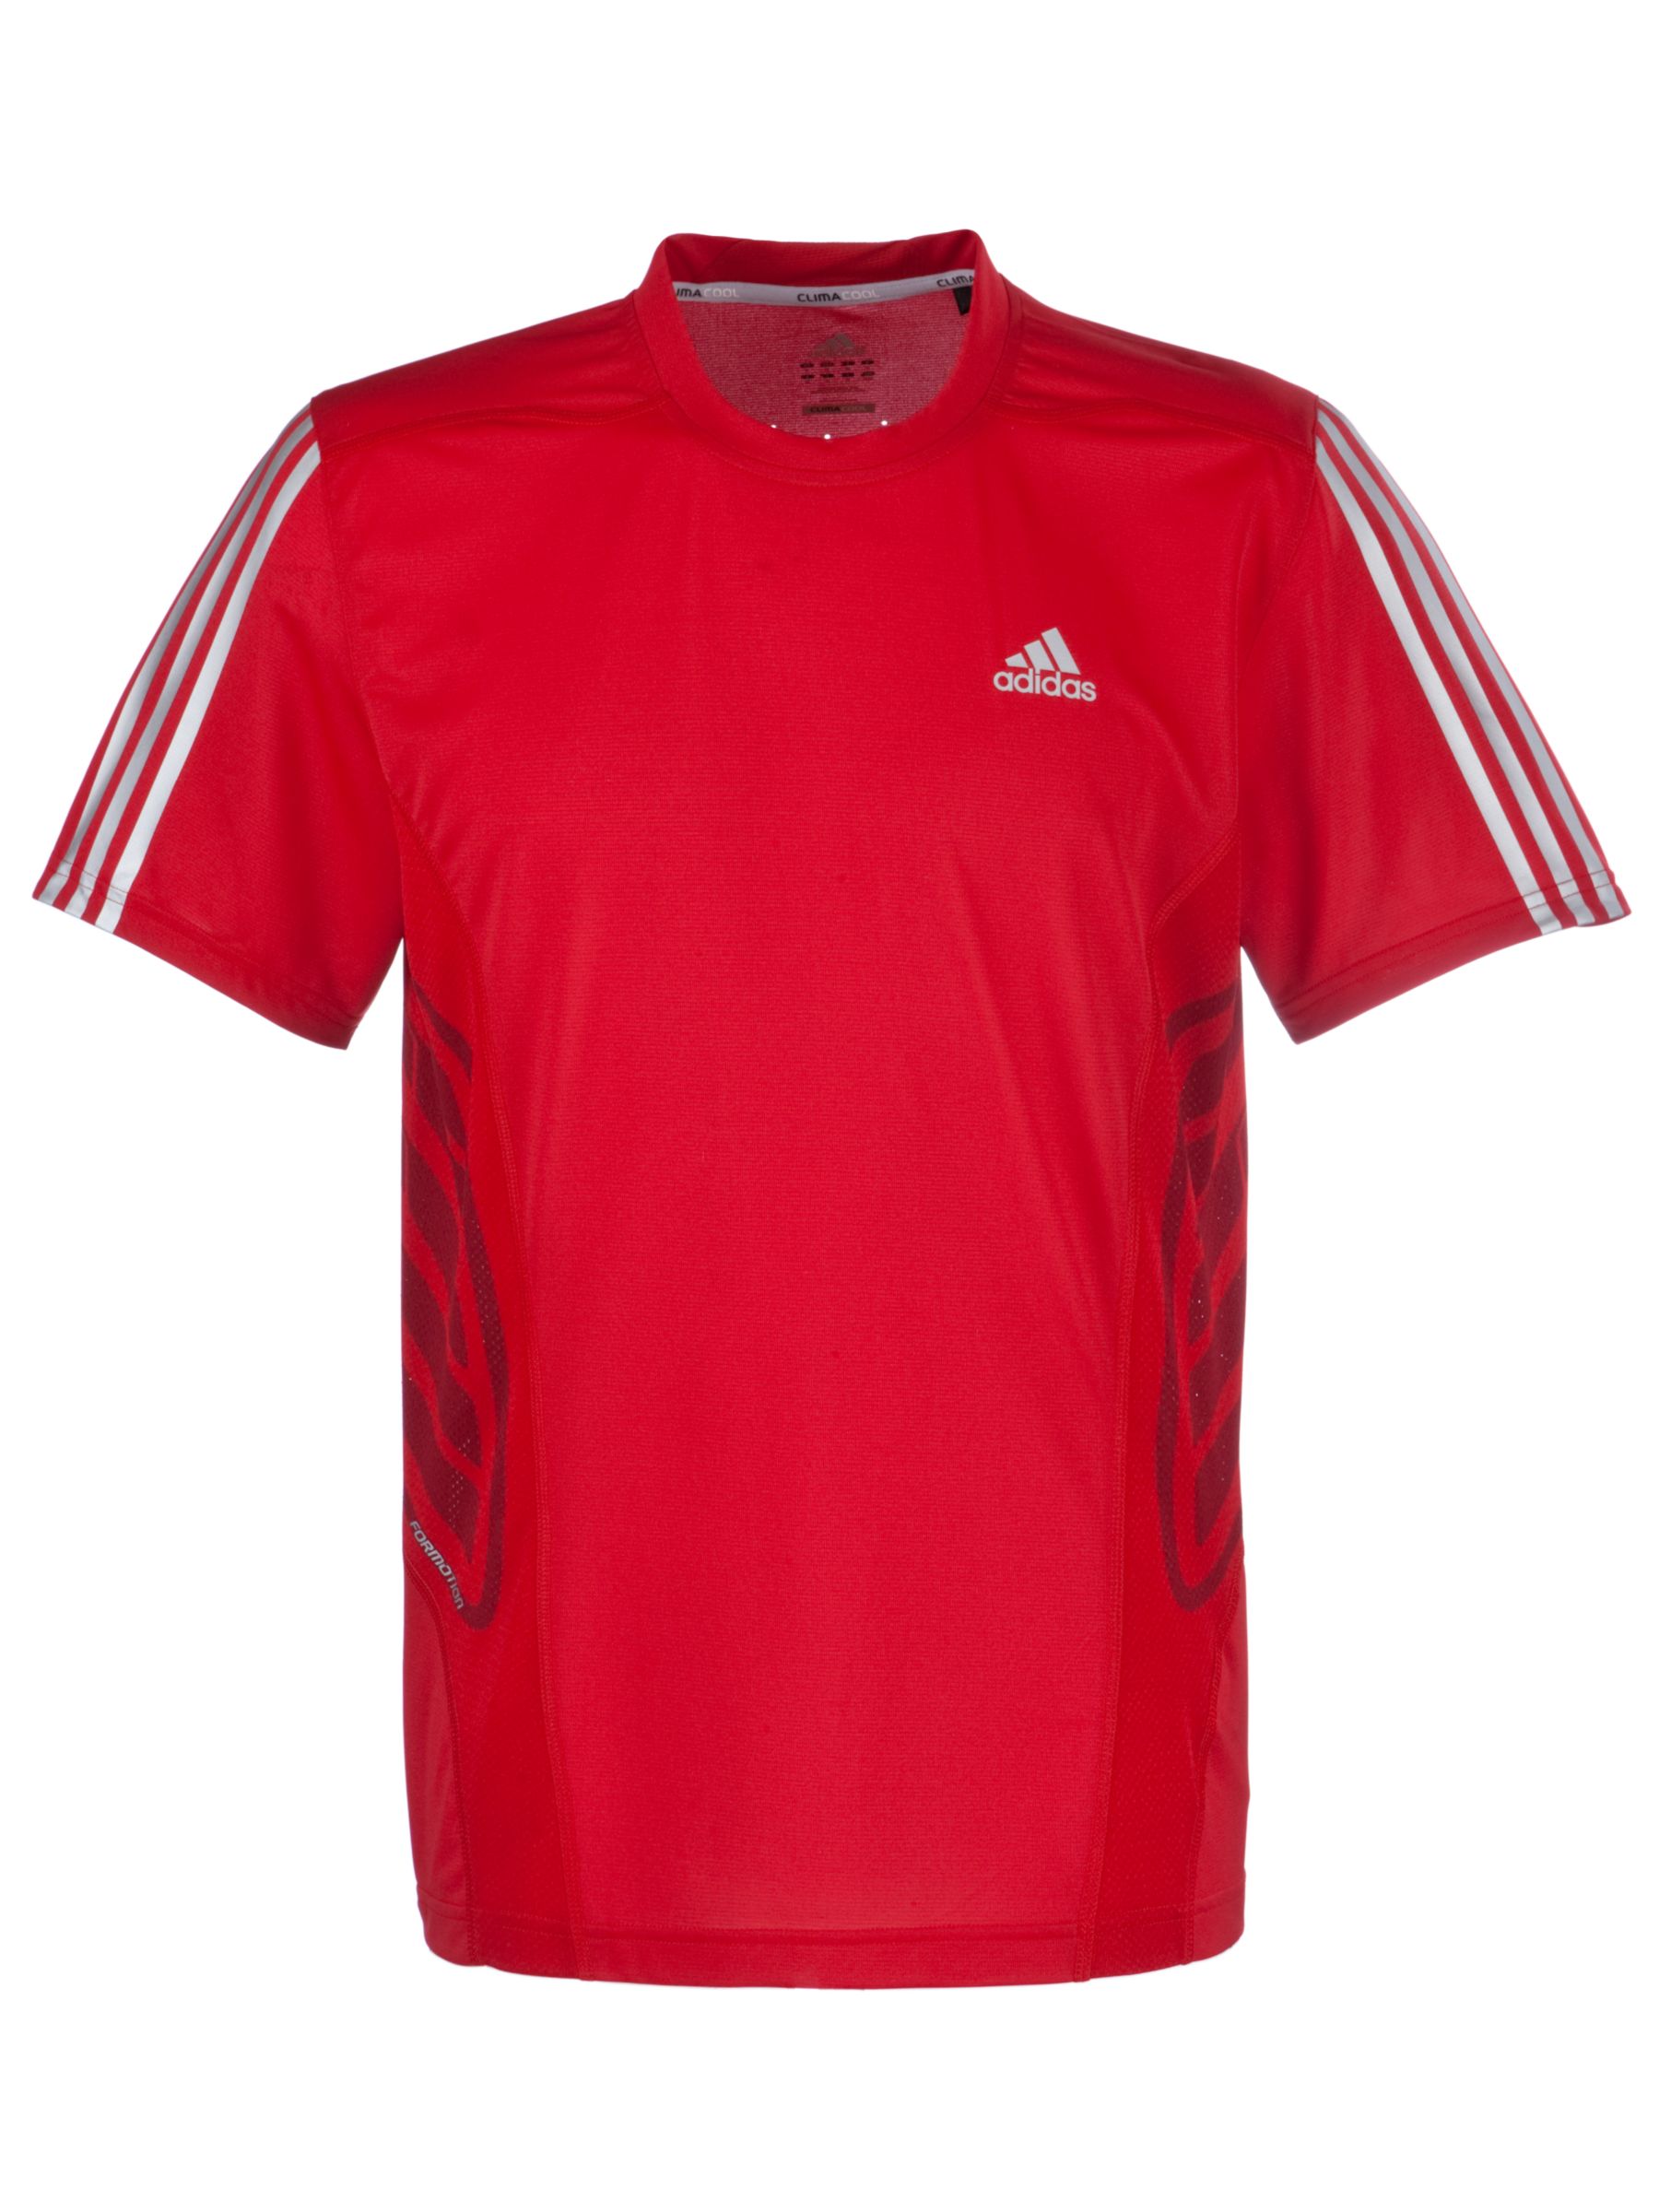 Adidas Adizero Short Sleeve T-Shirt, Red